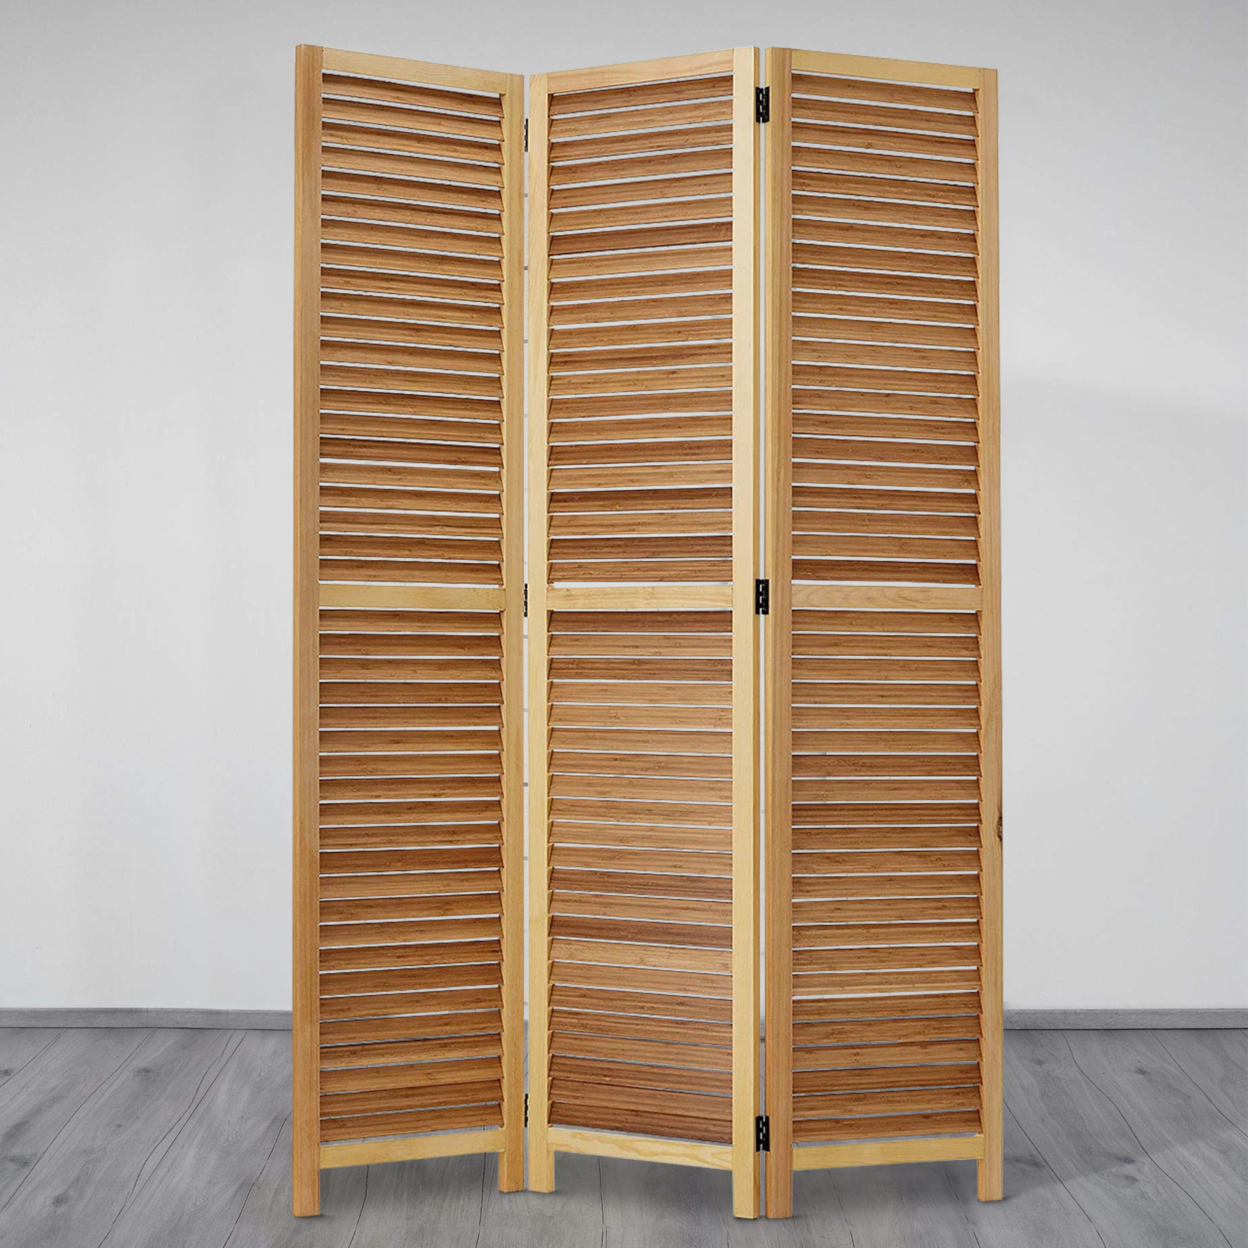 Wooden 3 Panel Shutter Screen With Bamboo Slats, Natural Brown- Saltoro Sherpi